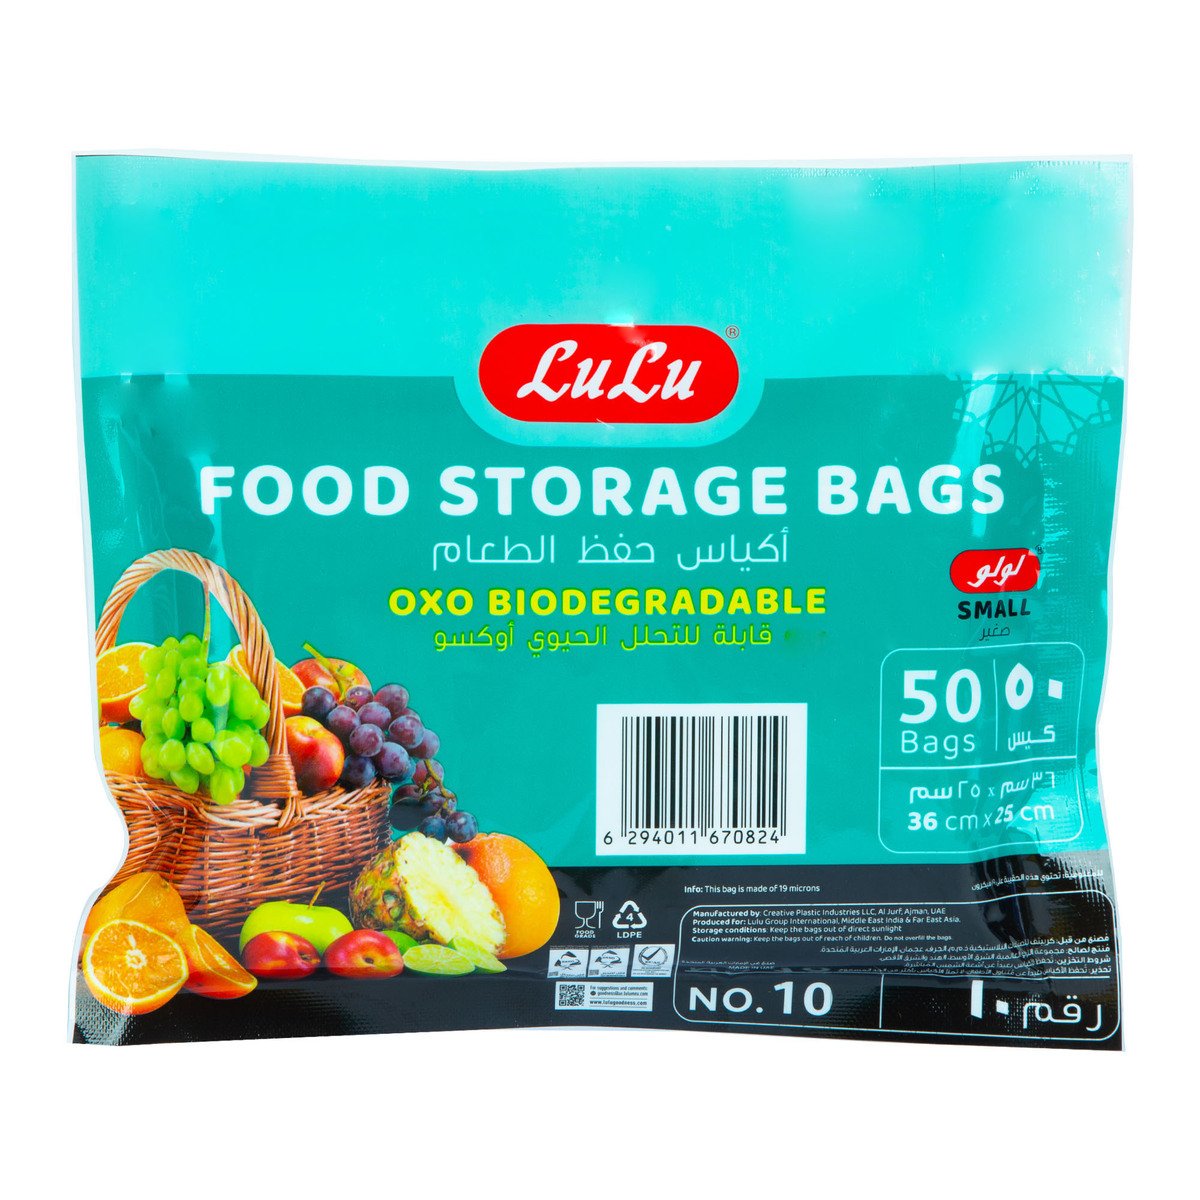 LuLu Food Storage Bags Small Size, 36cm x 25cm 50 pcs